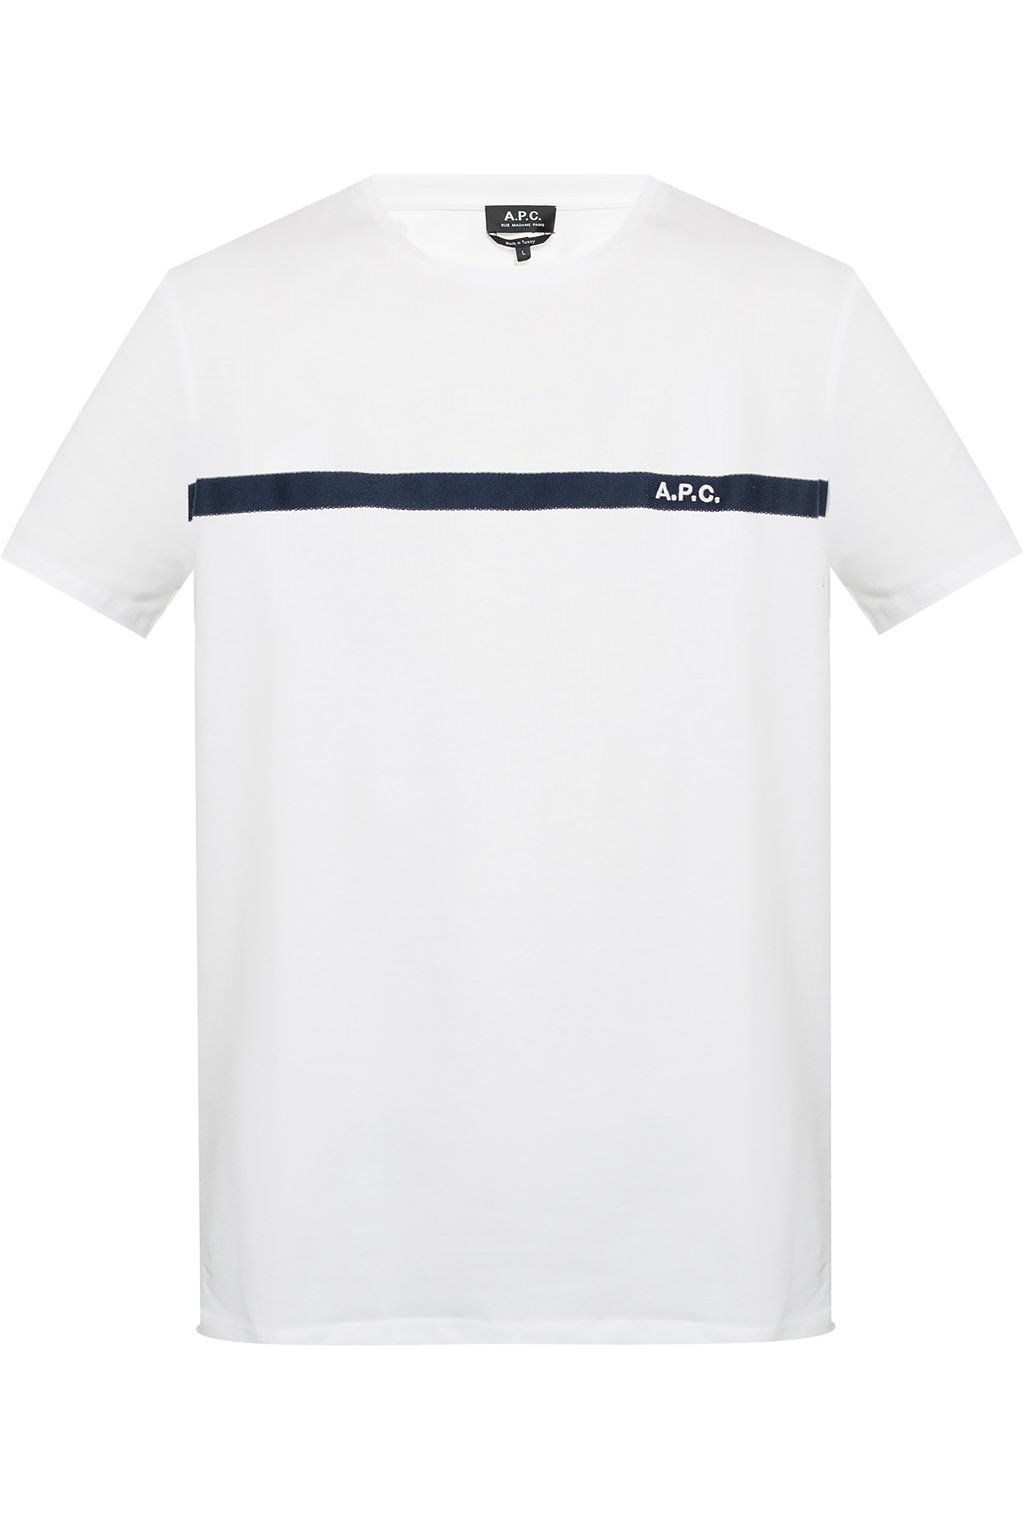 A.P.C. T-shirt Navy with logo stripe